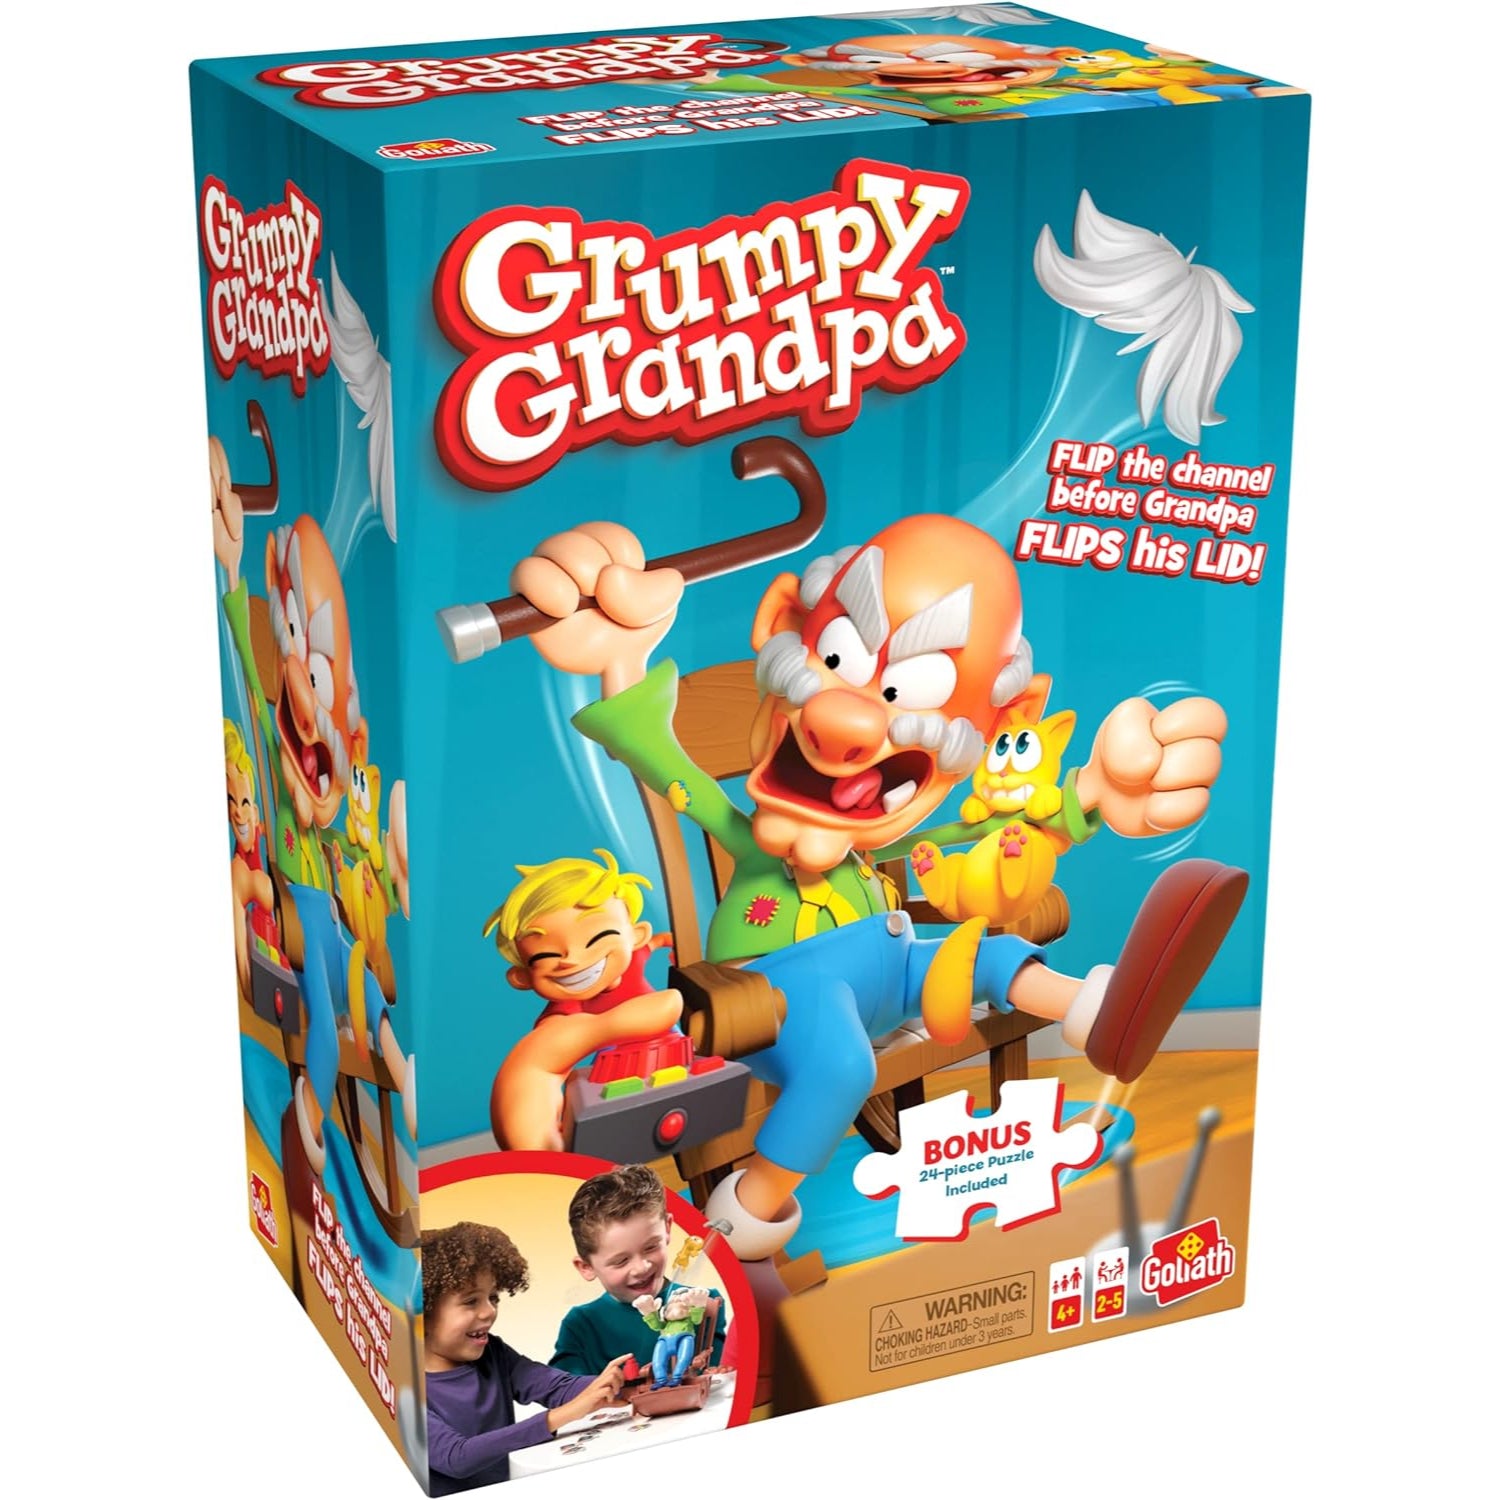 Goliath Grumpy Grandpa Game - Flip The Channel Before Grandpa Flips His Lid